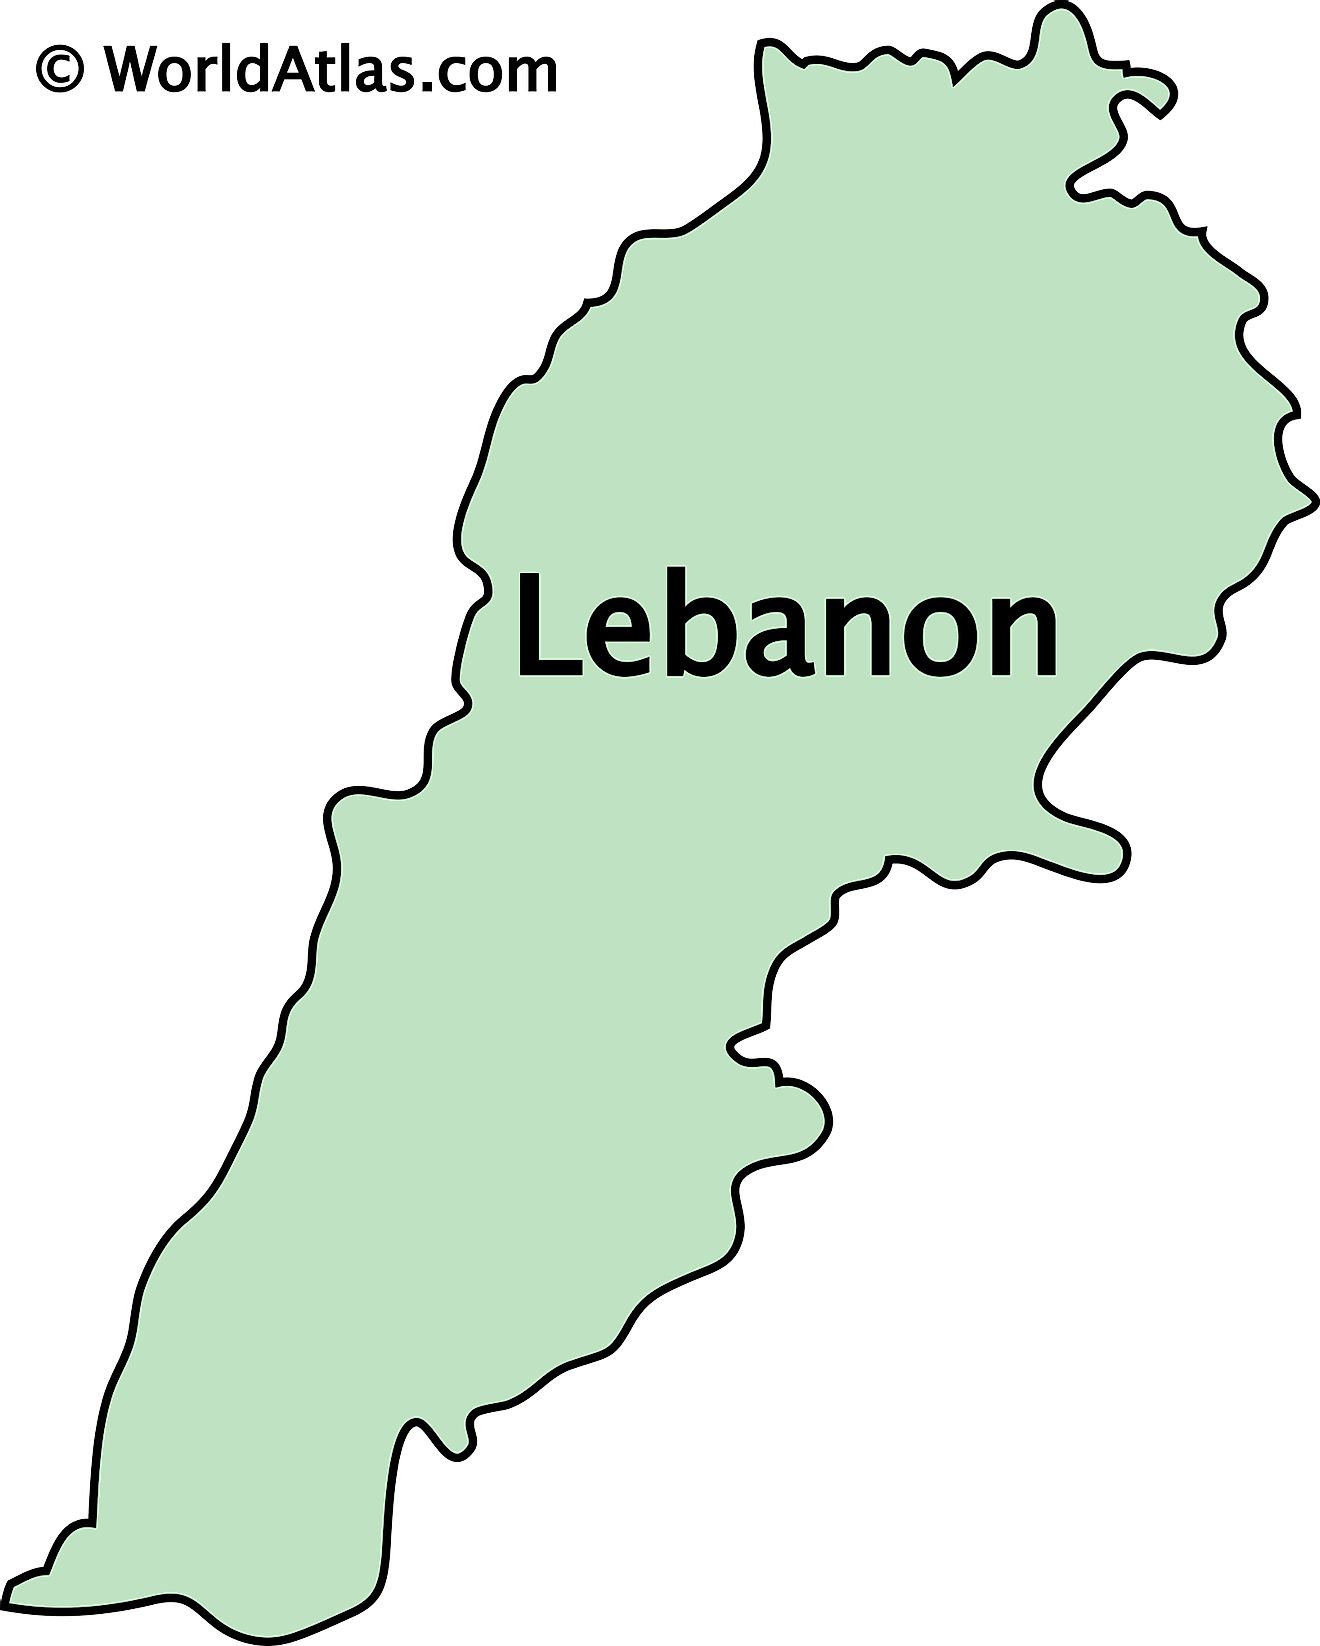 Lebanon Maps & Facts - World Atlas 526